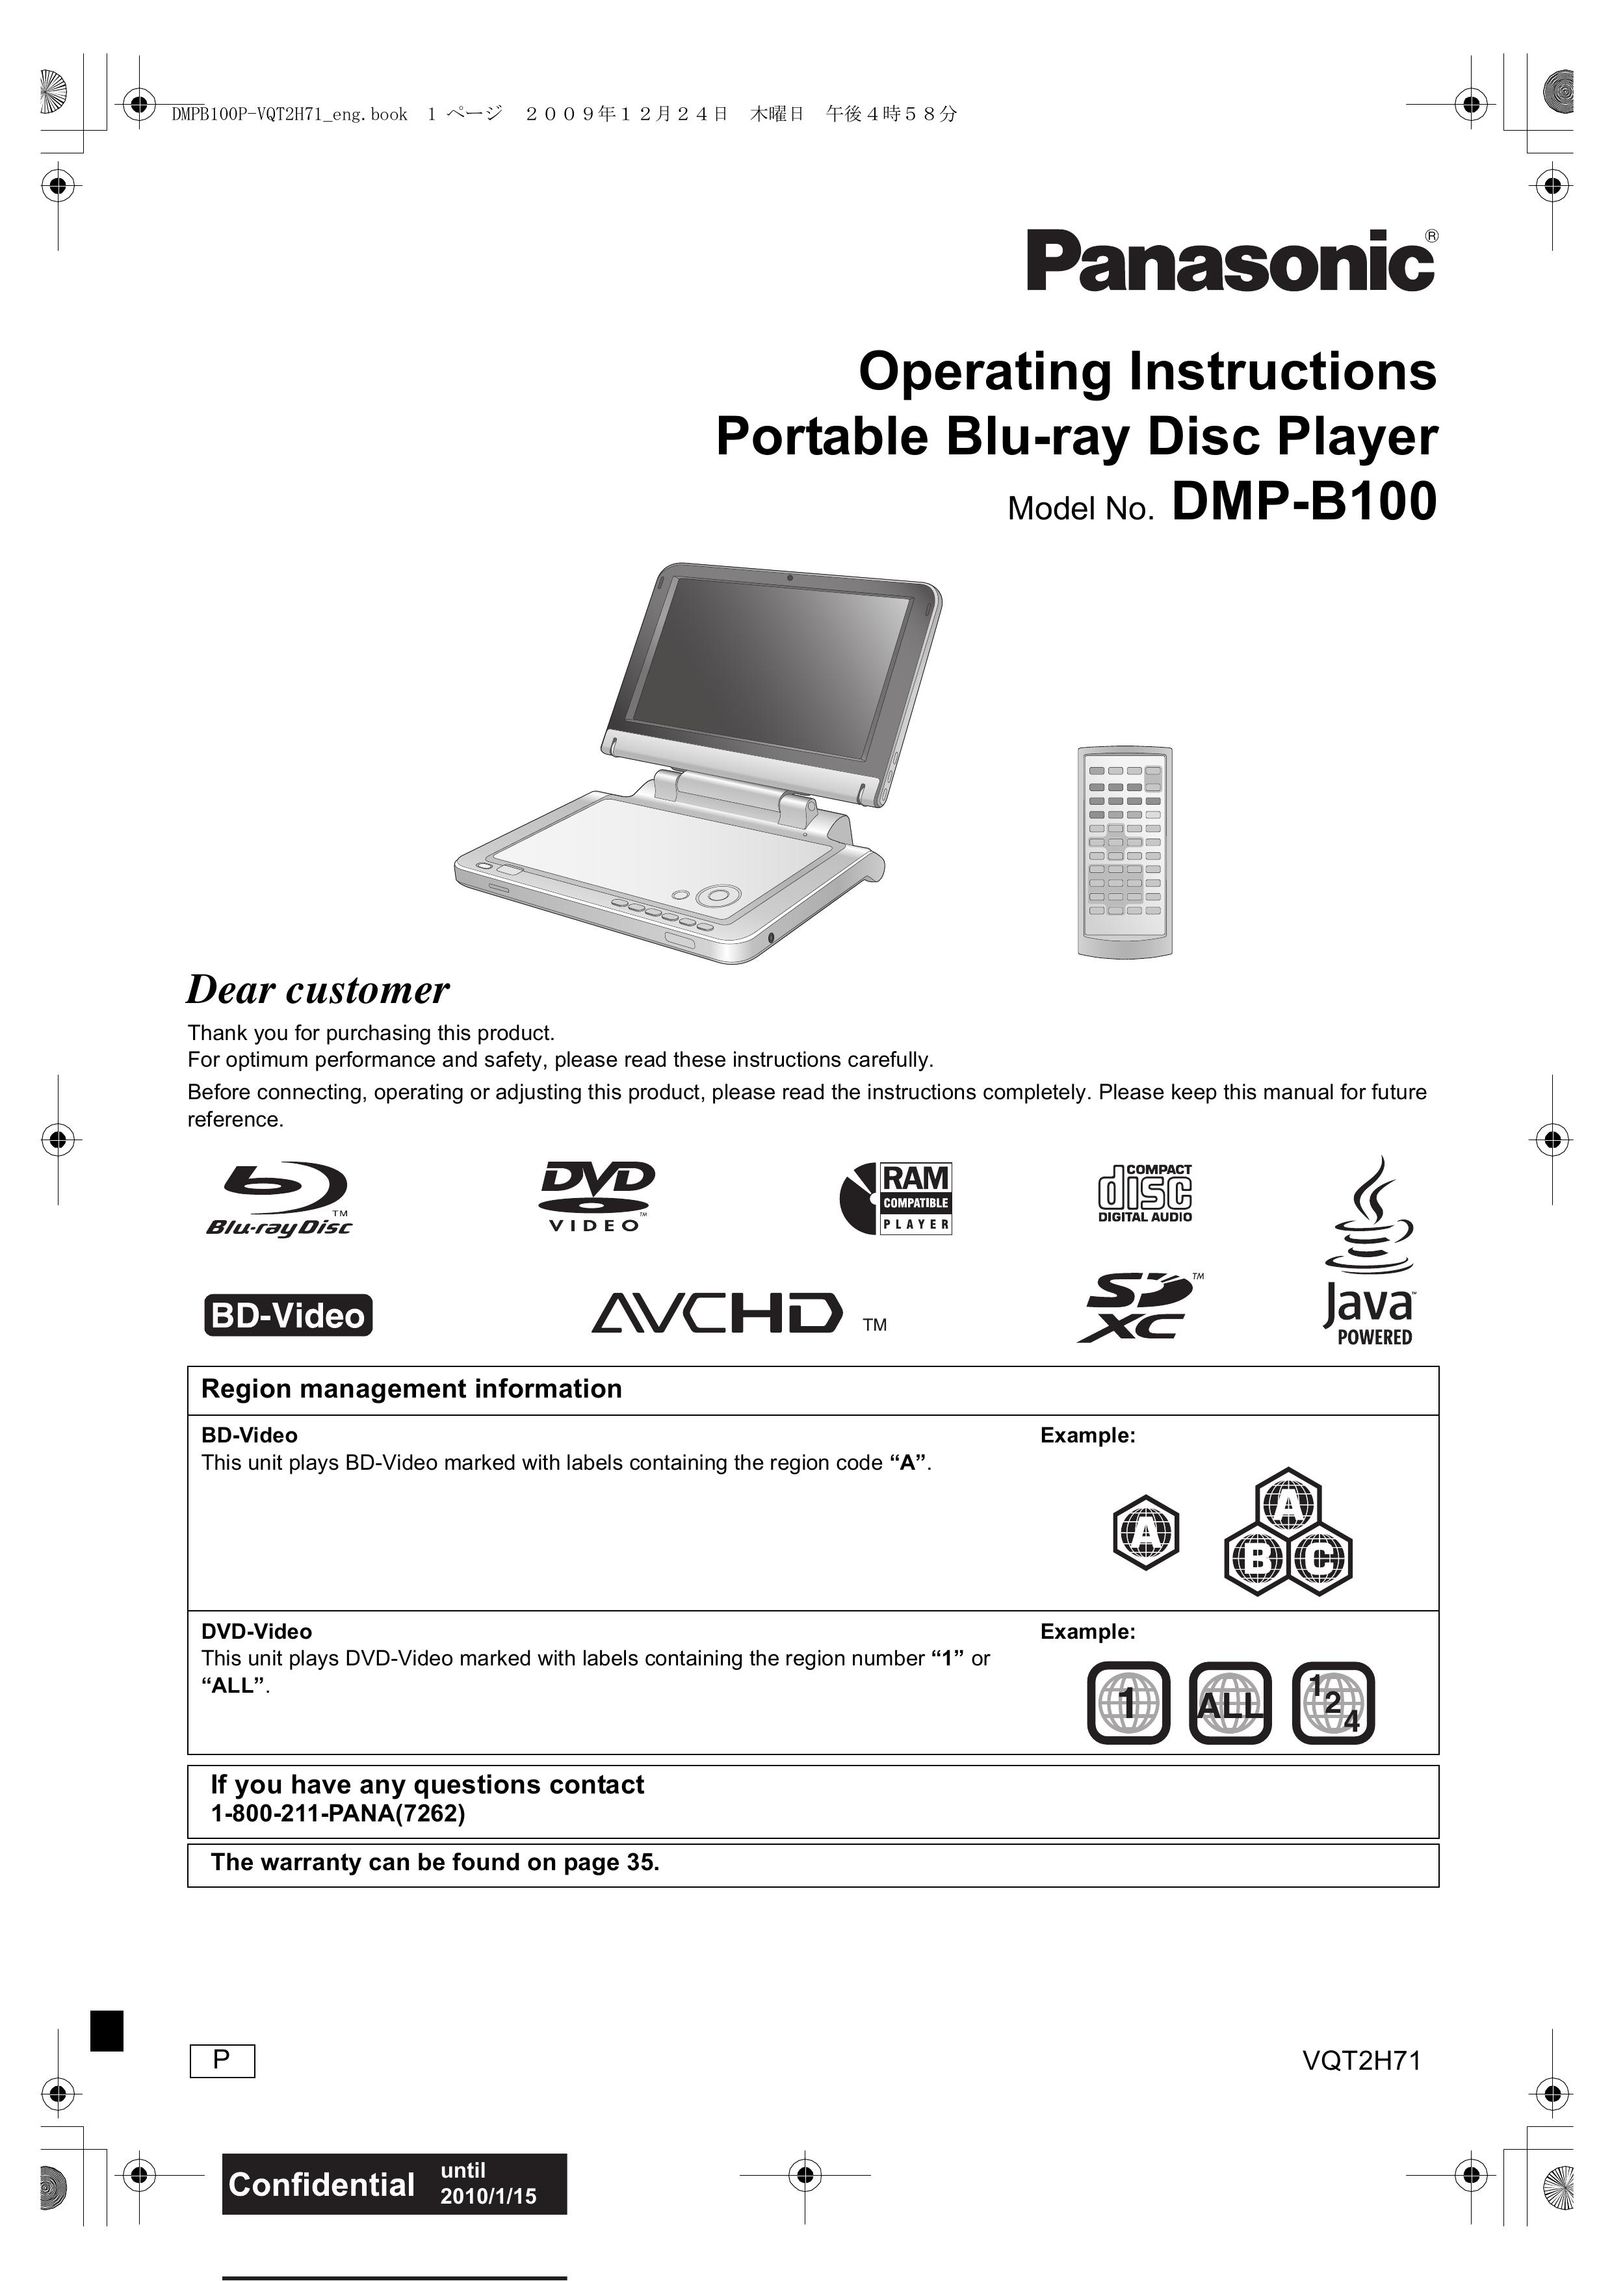 Panasonic DMP-B100 Blu-ray Player User Manual